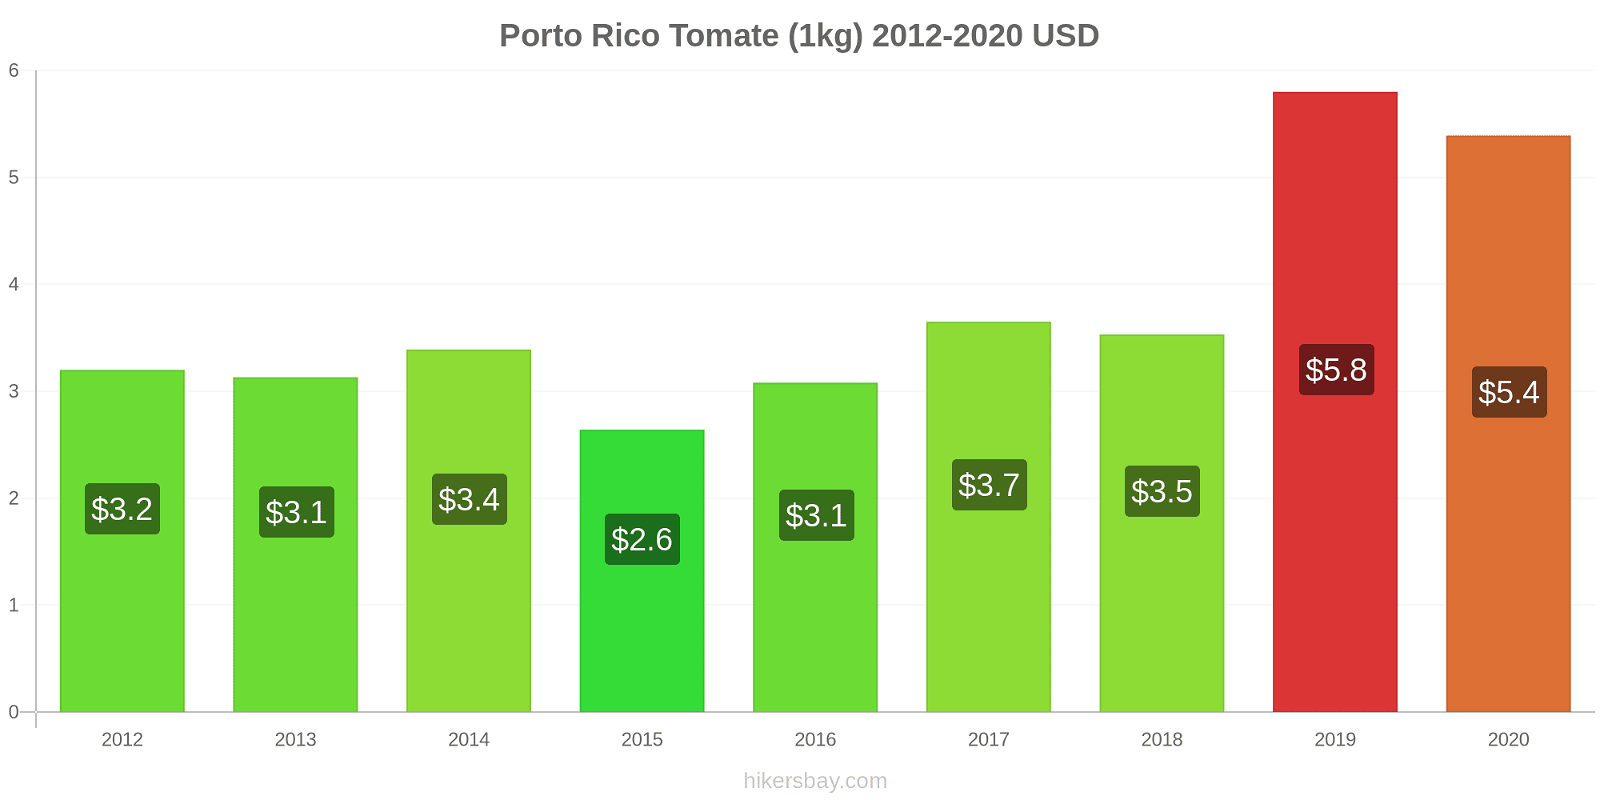 Porto Rico changements de prix Tomate (1kg) hikersbay.com